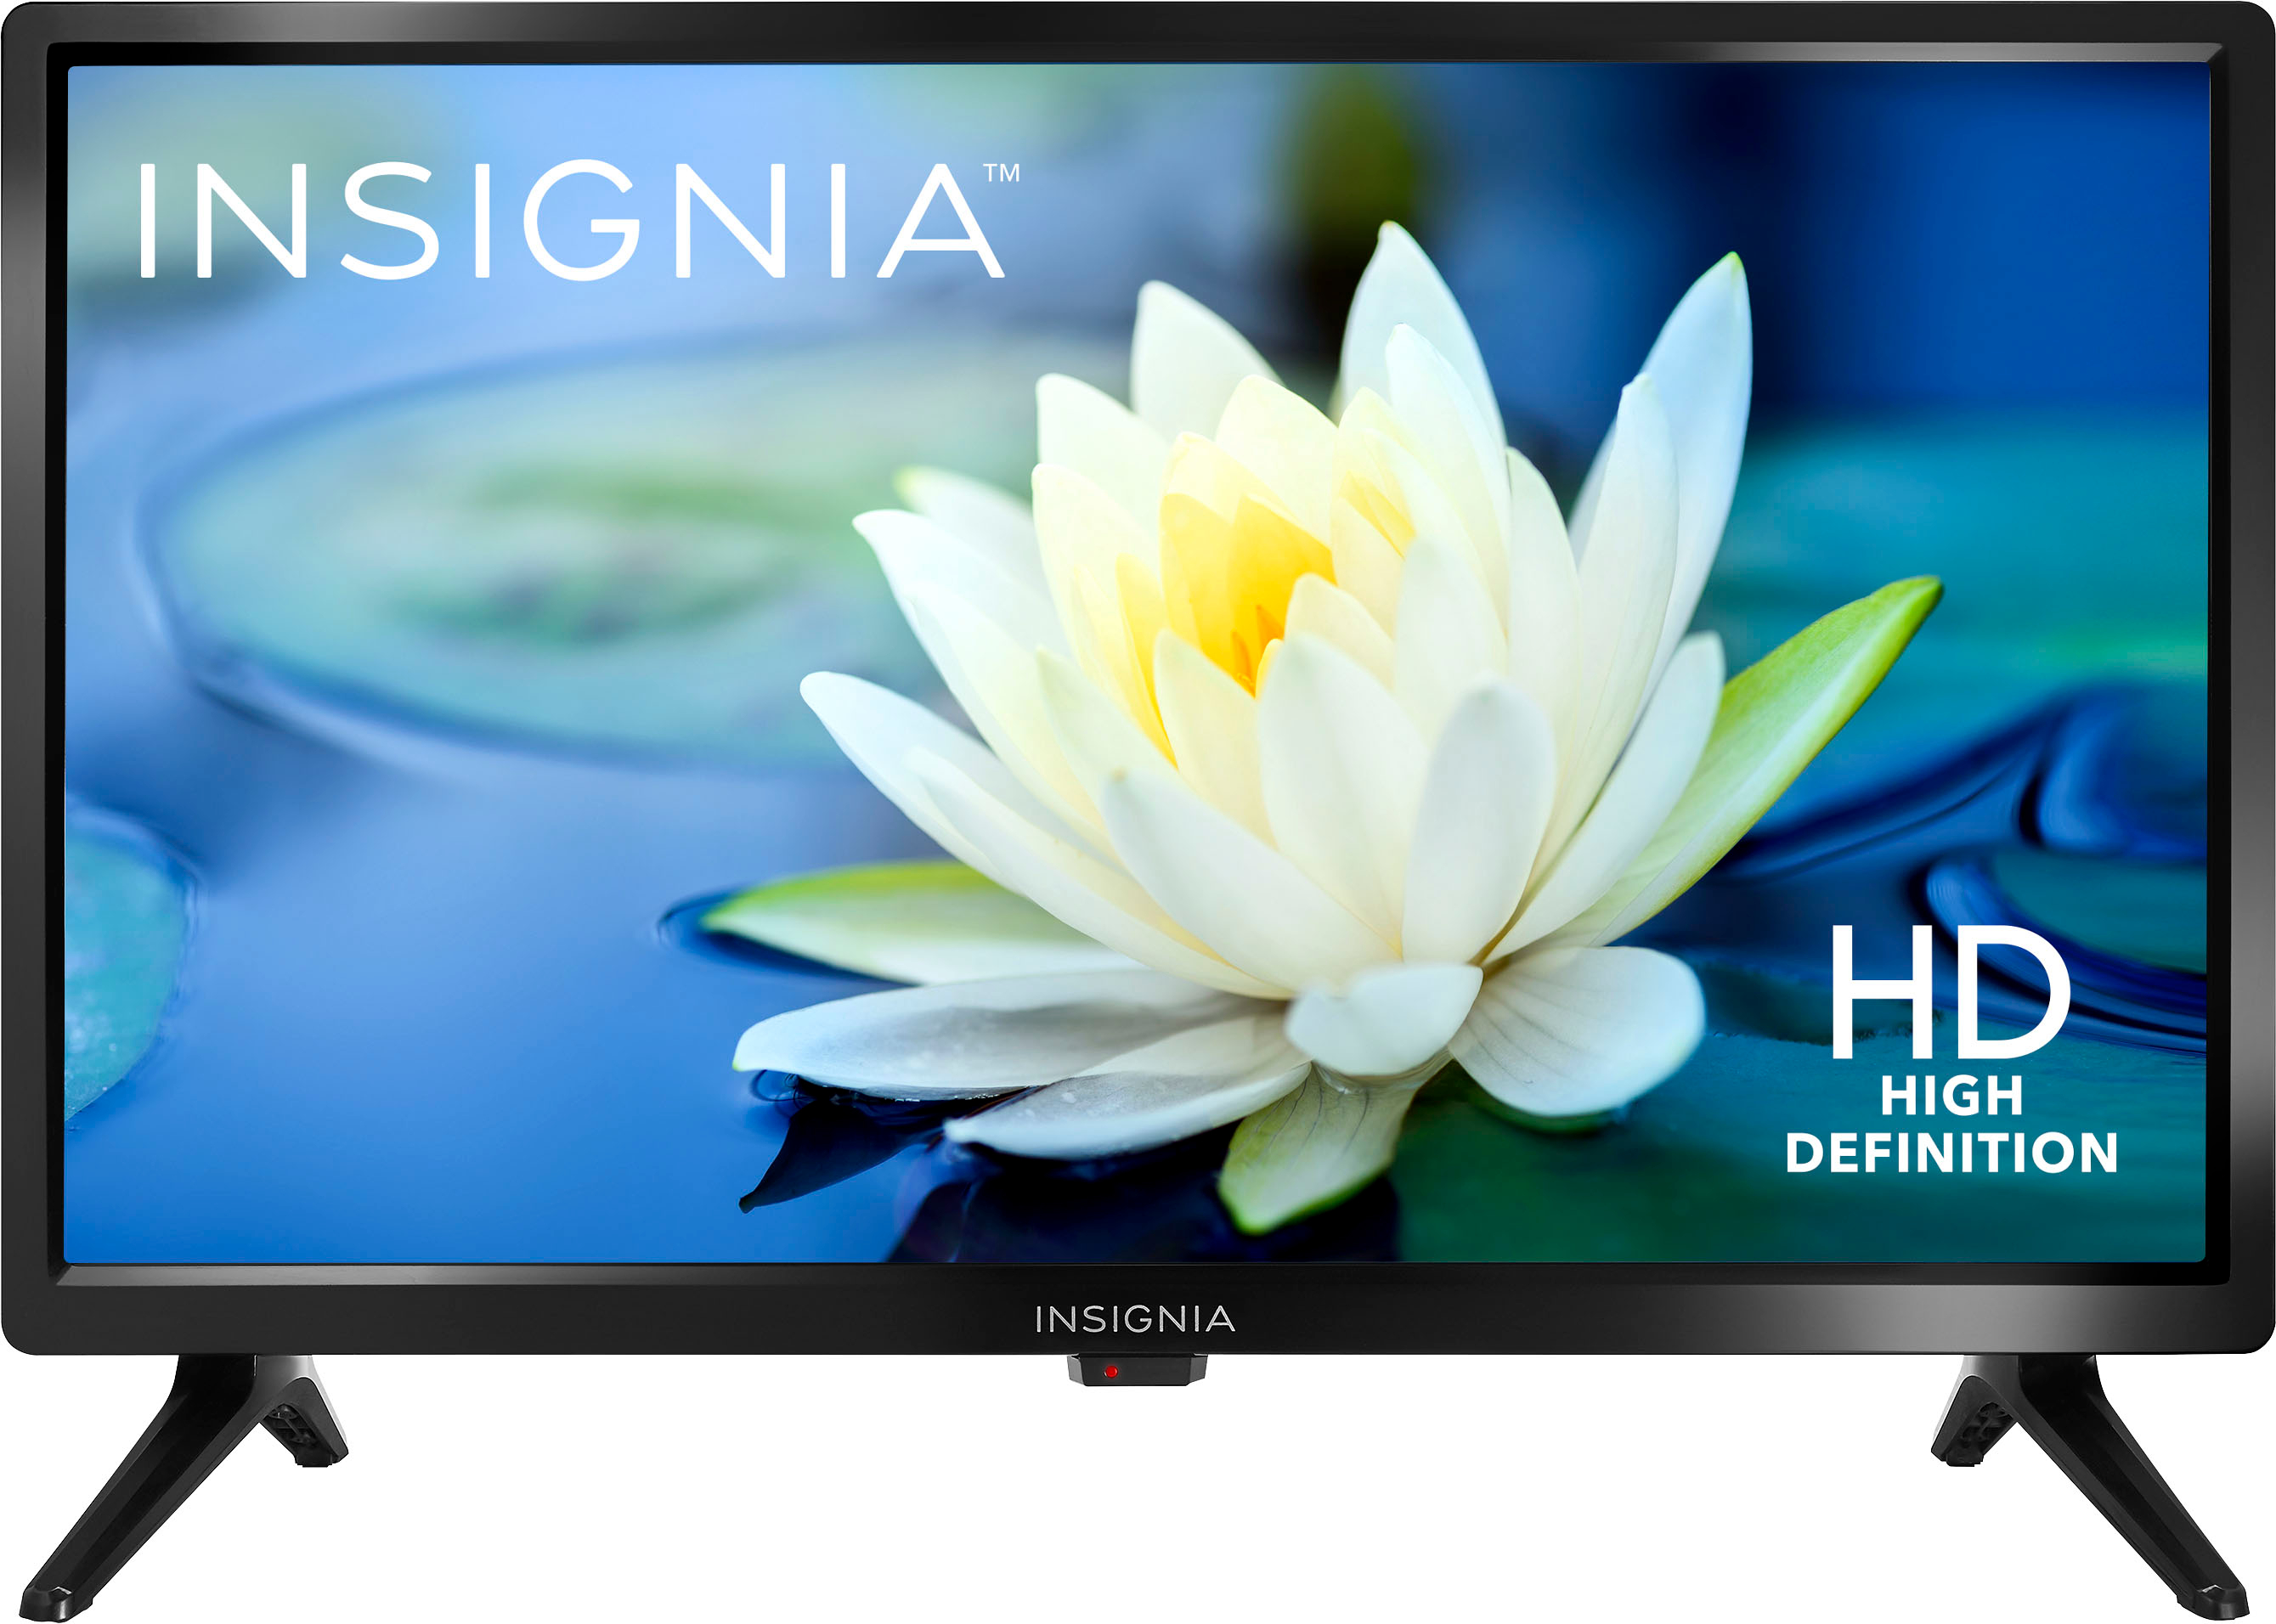 Insignia- 19" Class 720p LED HDTV 